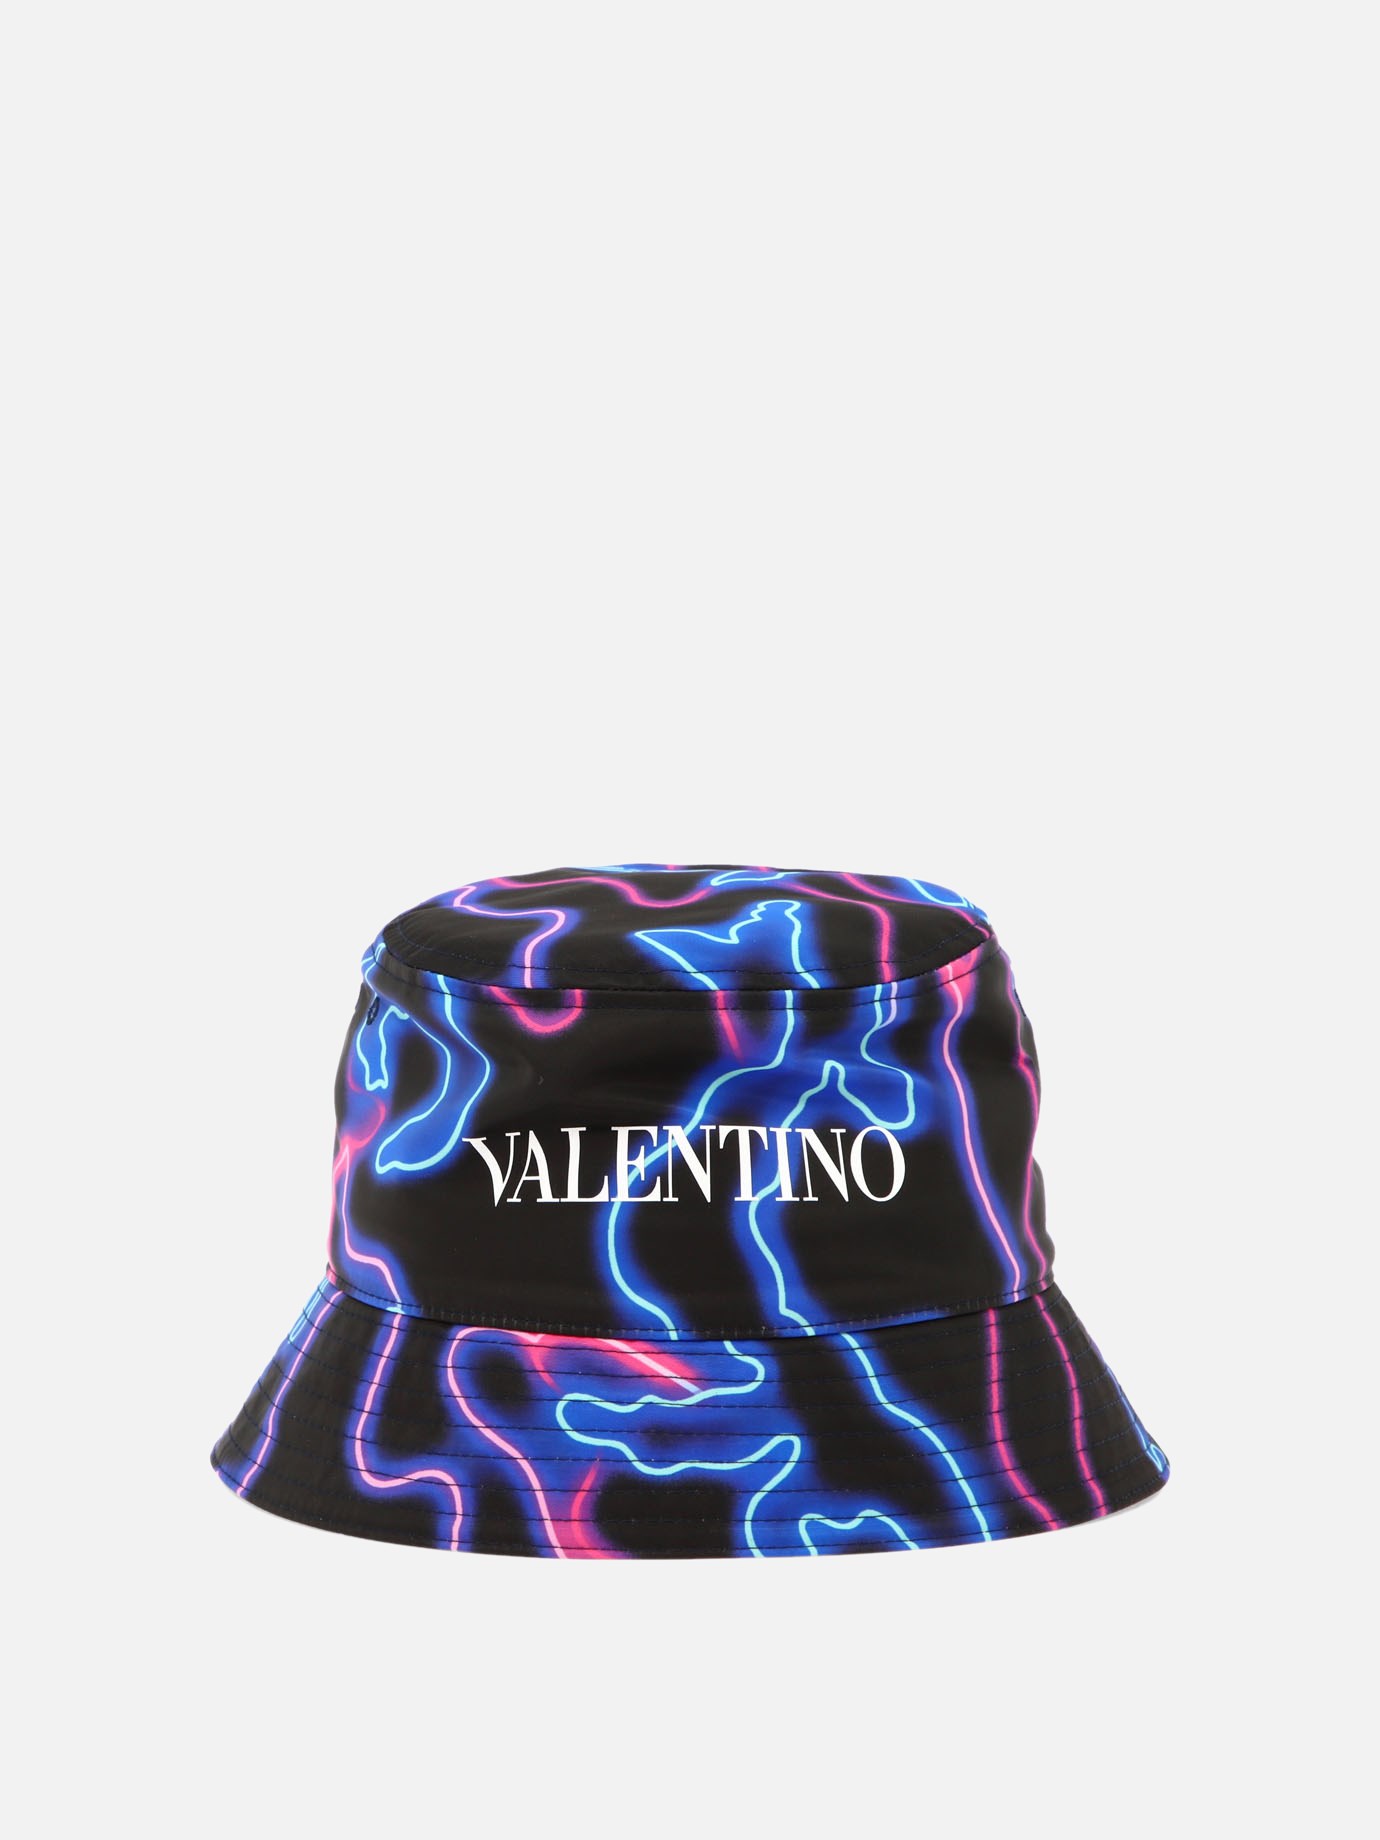  Neon Camou  bucket hatby Valentino Garavani - 5